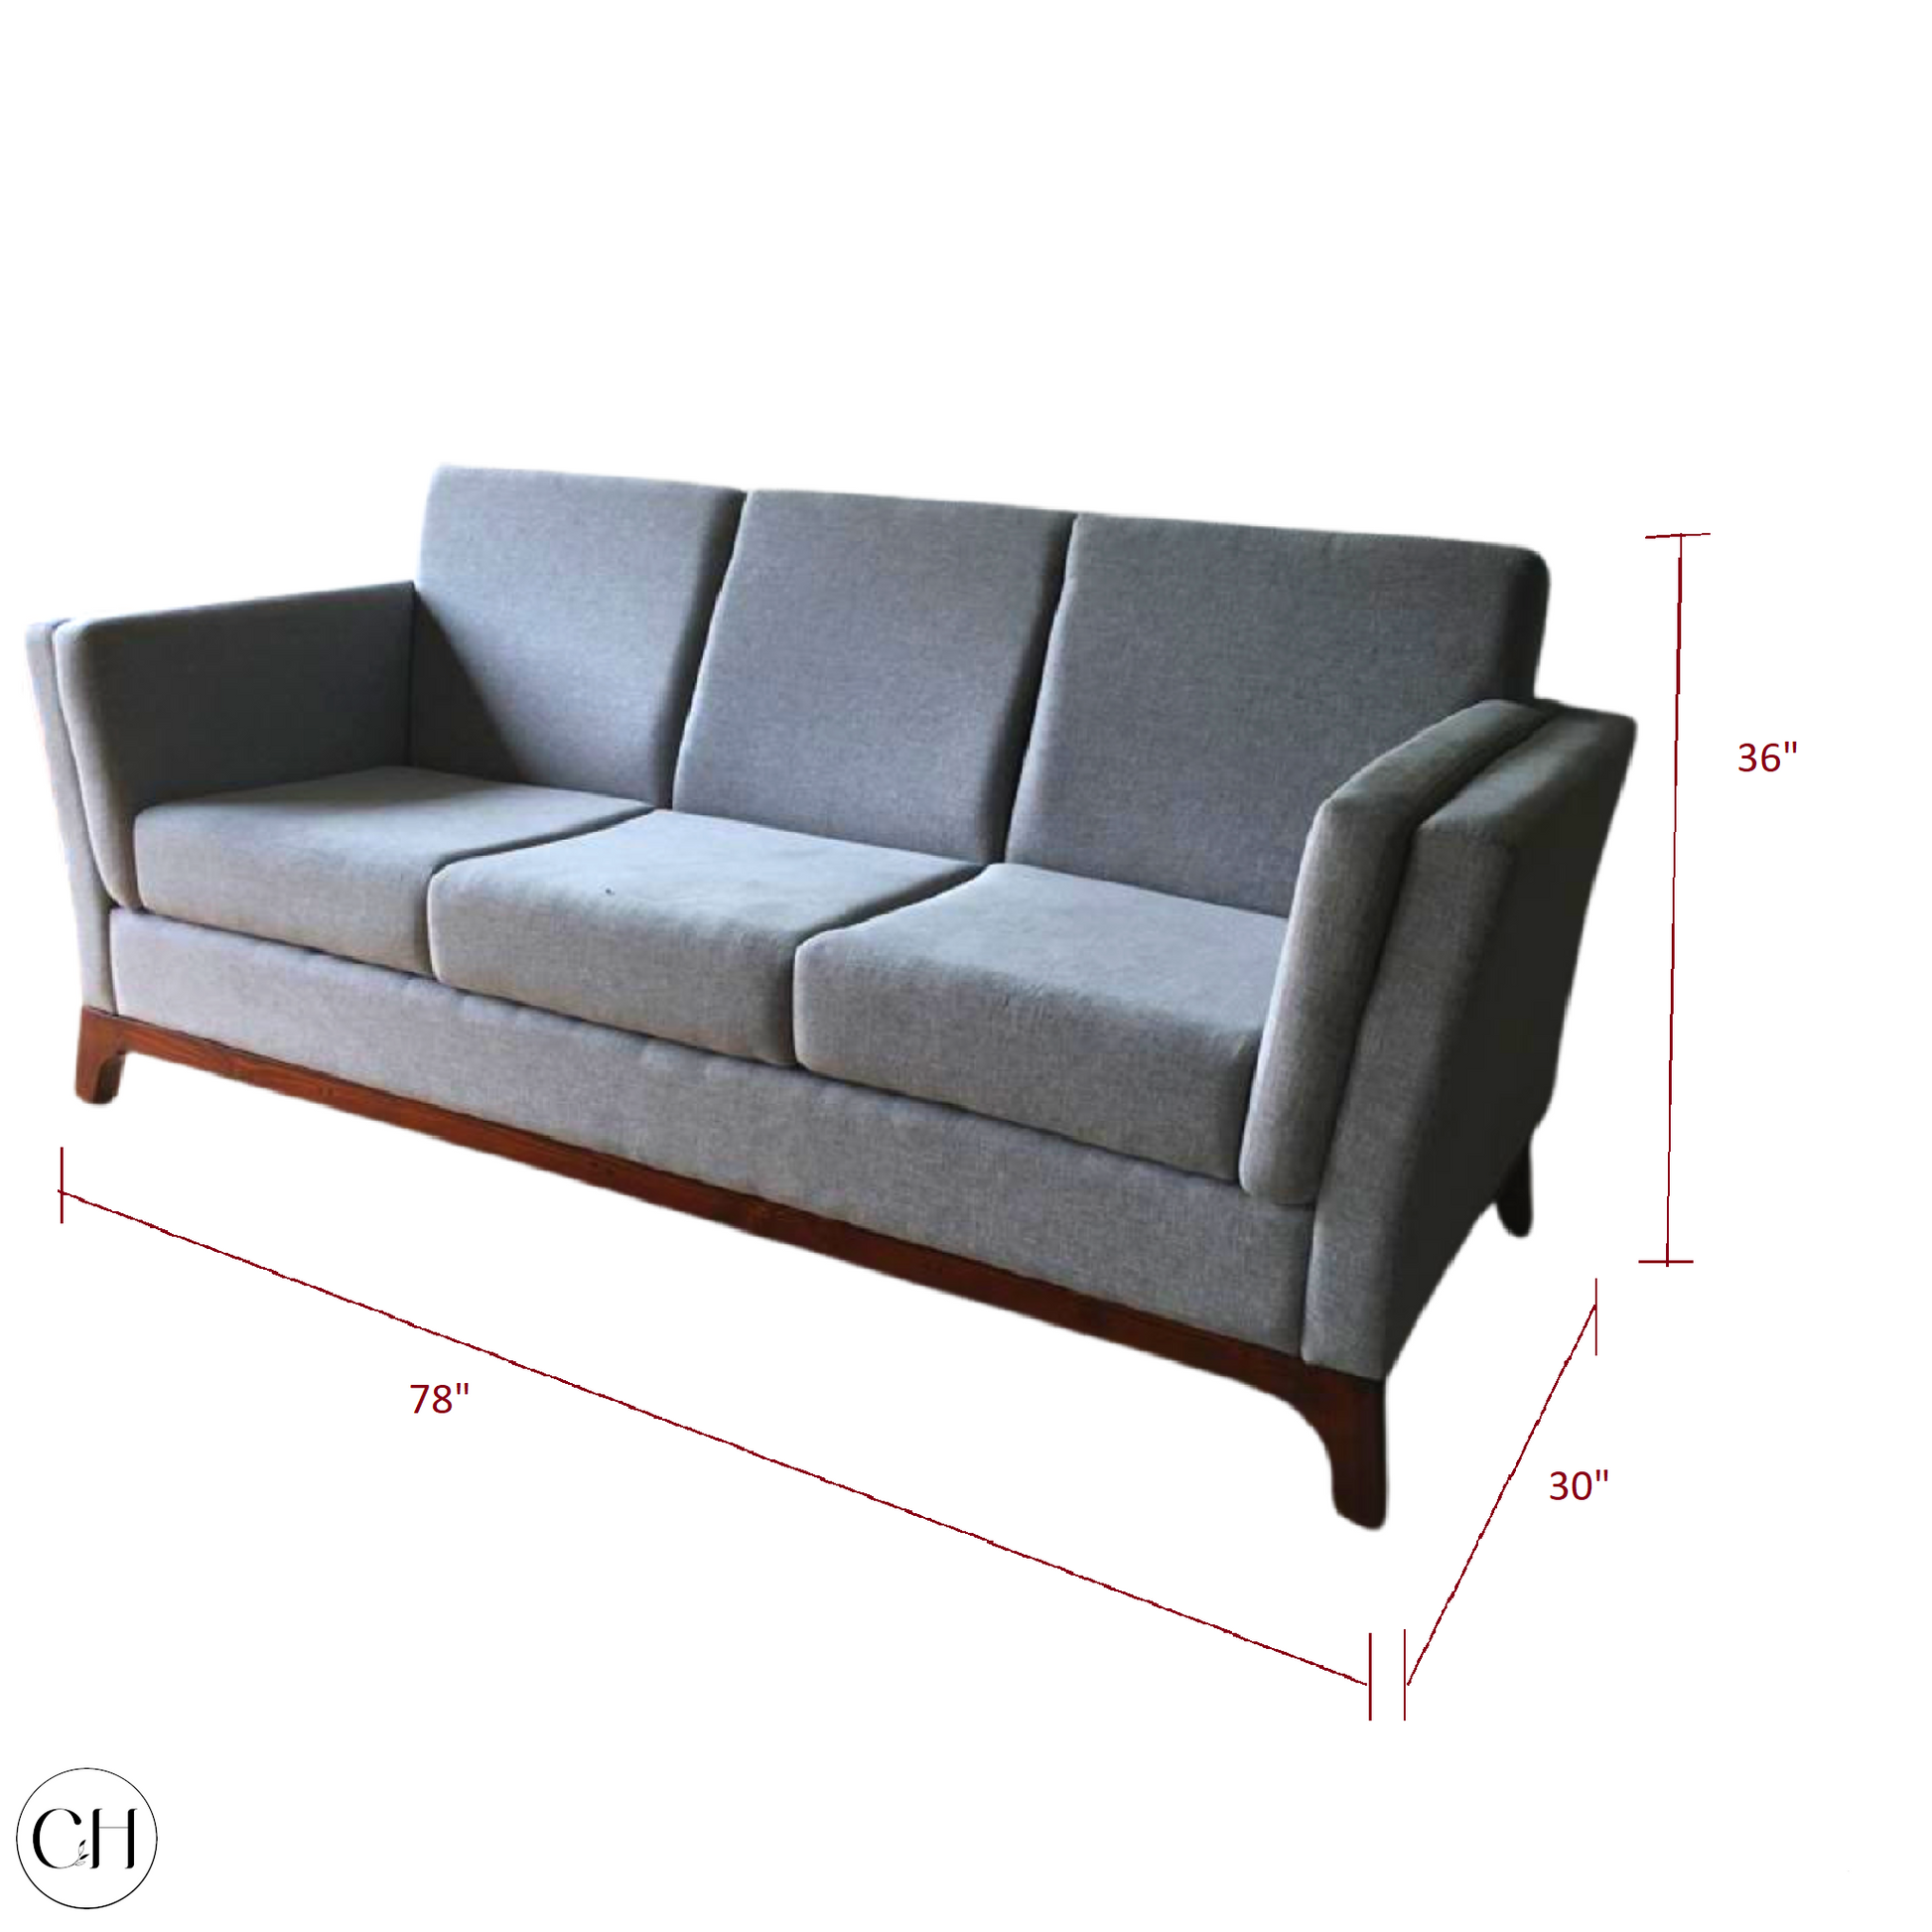 CustHum-Aasana- 3-seater upholstered sofa in gray fabric (dimensions)